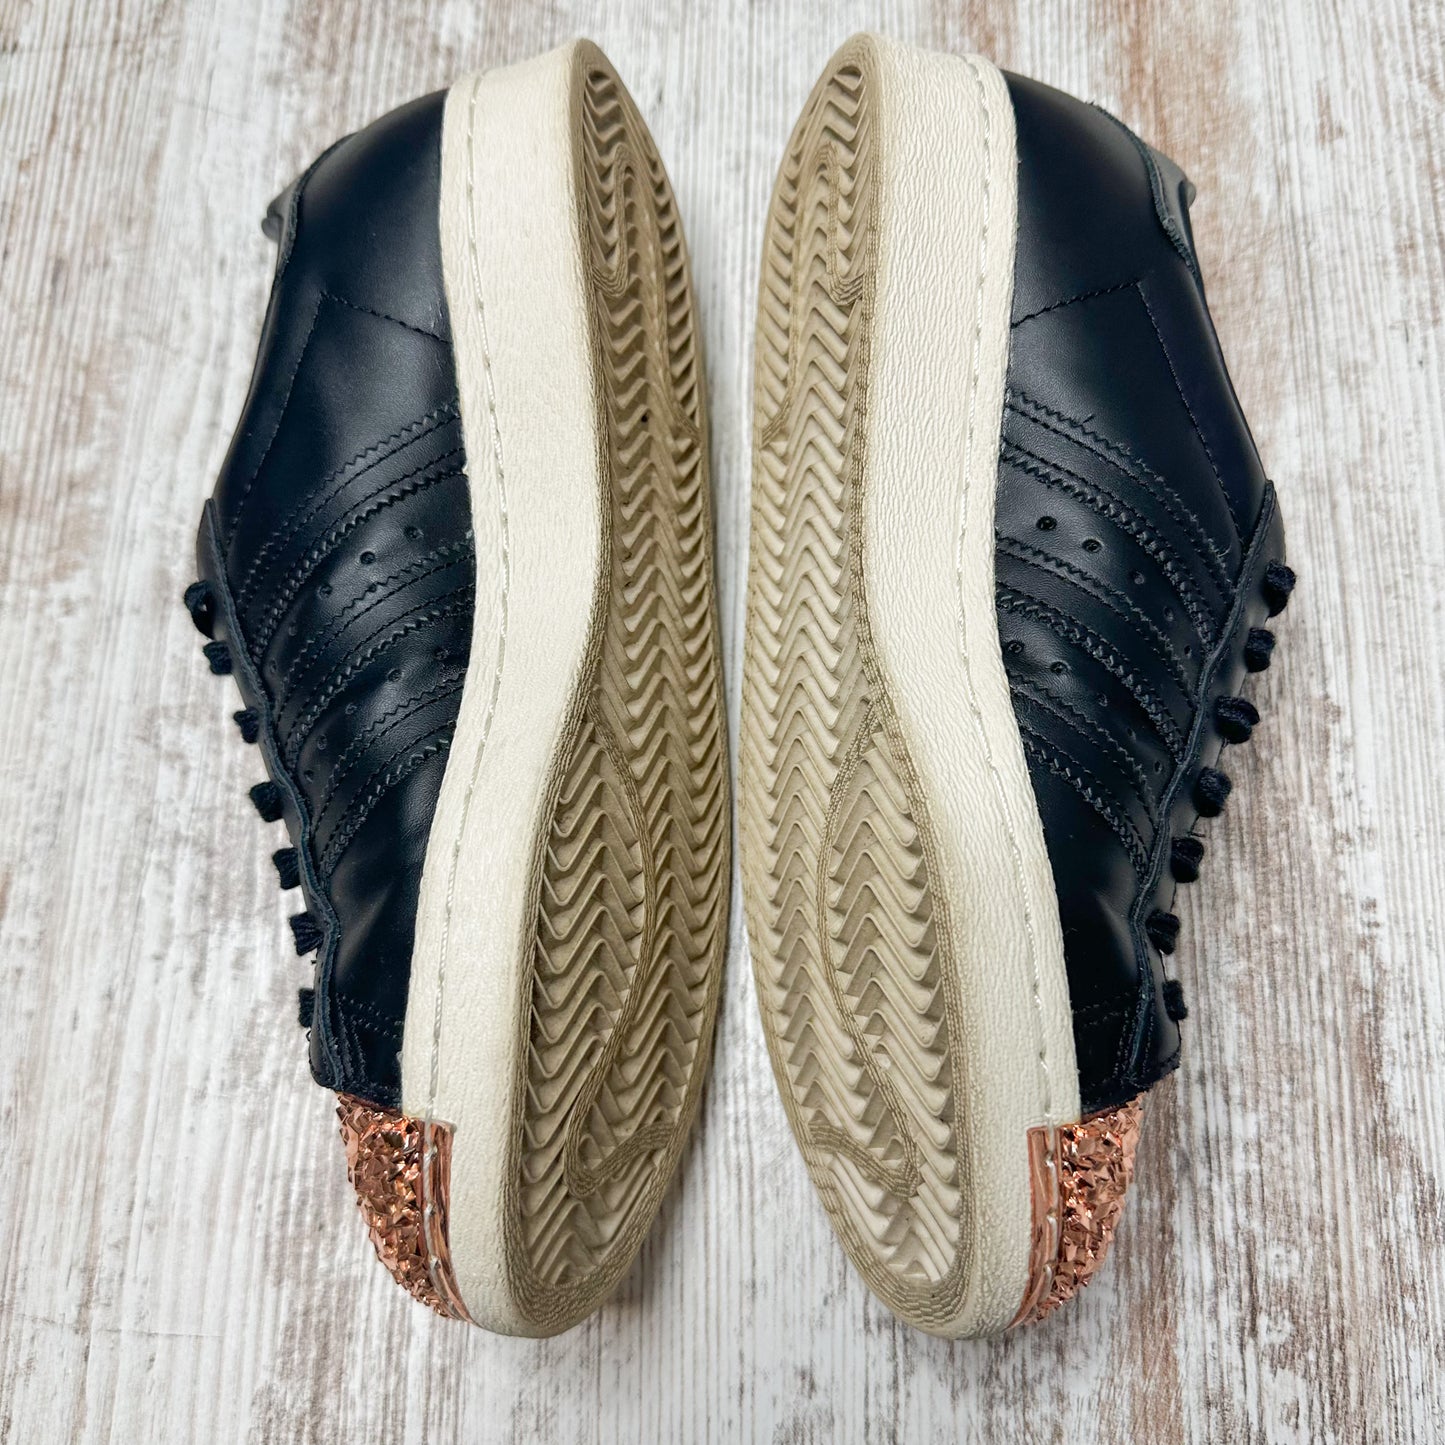 Adidas Originals Superstar 80s Rose Gold Metal Toe Sneakers Size 7